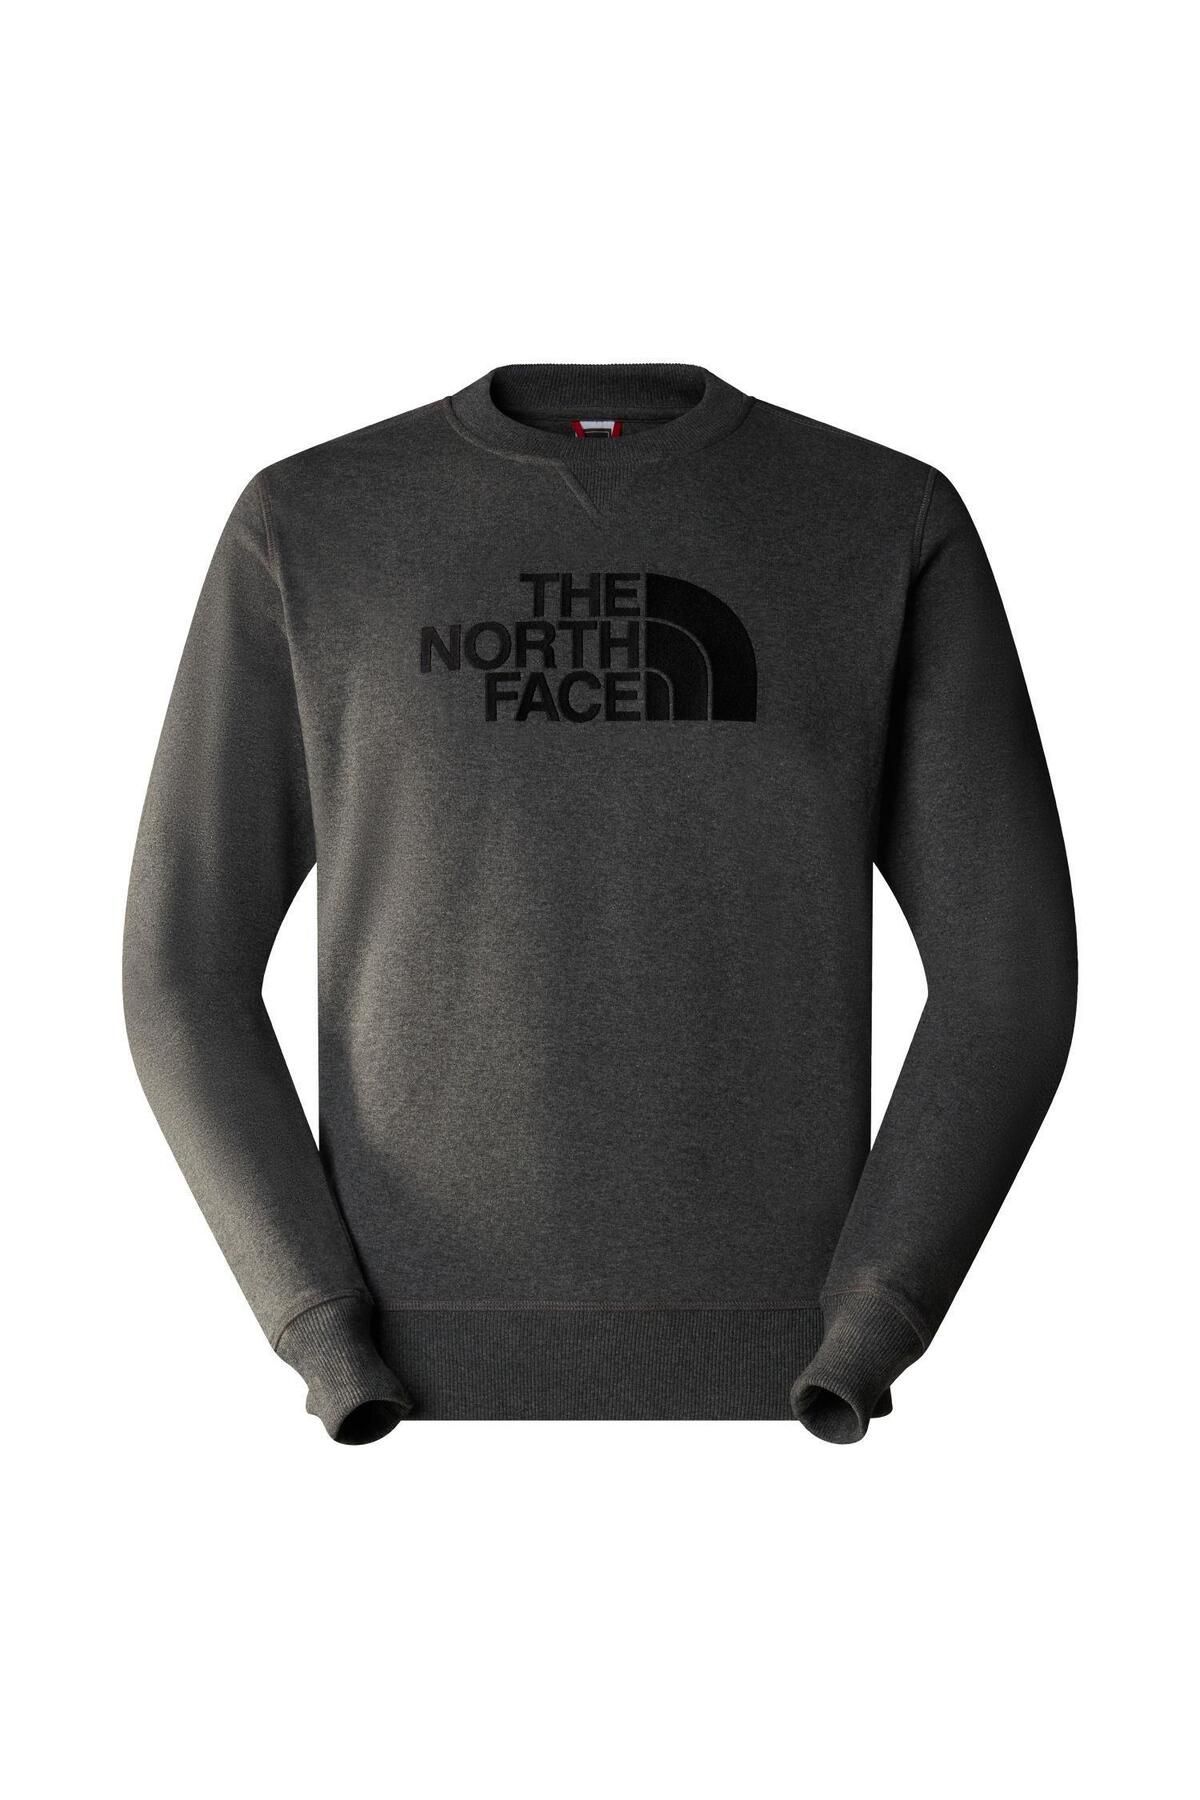 The North Face M DREW PEAK CREW LIGHT NF0A4T1EDYY1